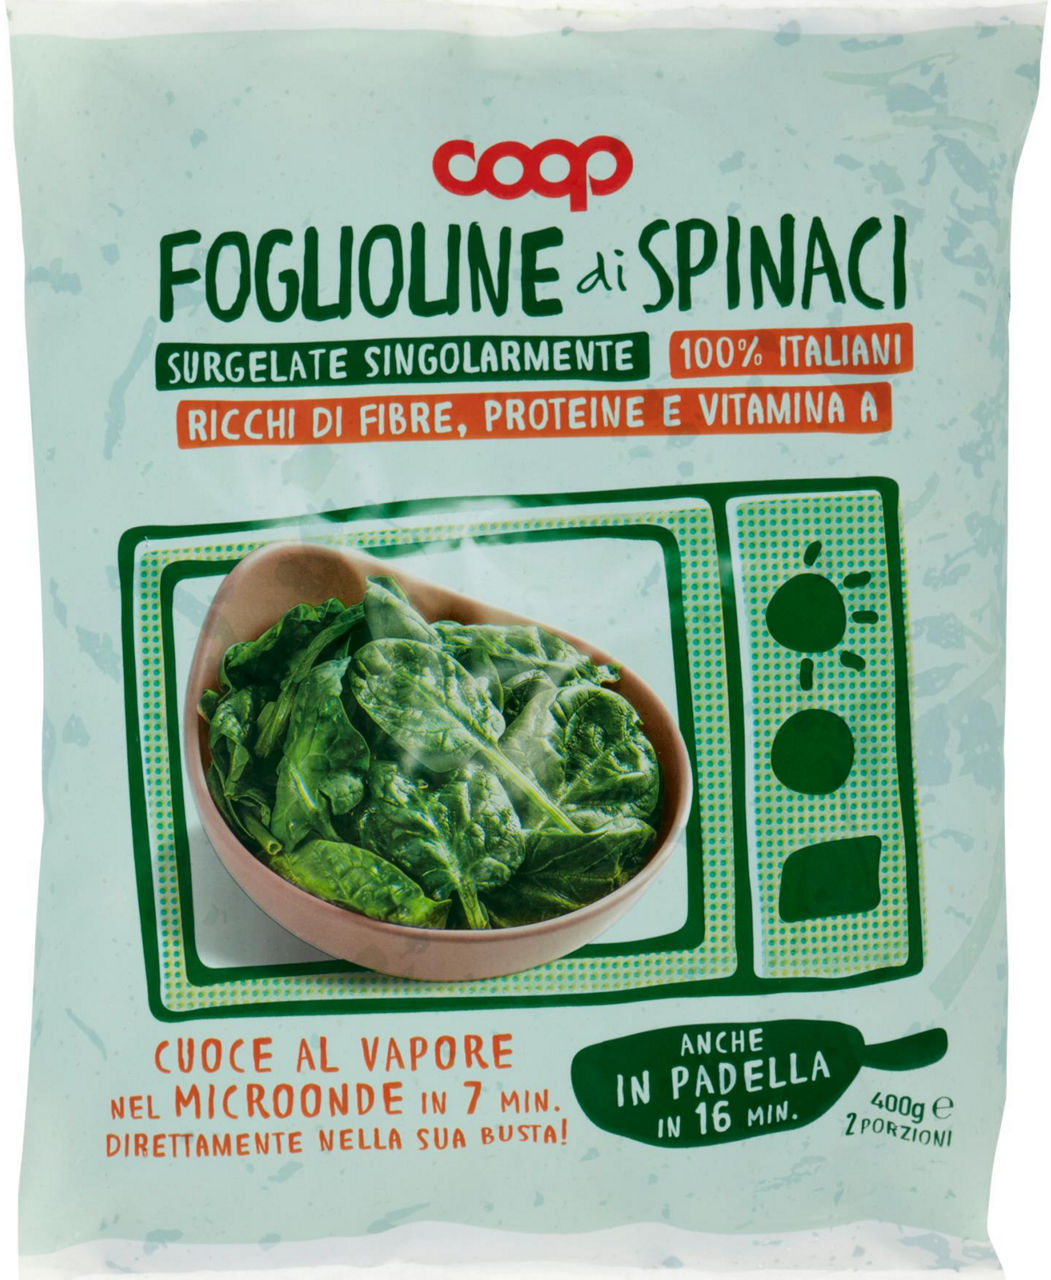 Spinaci in foglioline surg.singolarmente per microonde coop 400 g